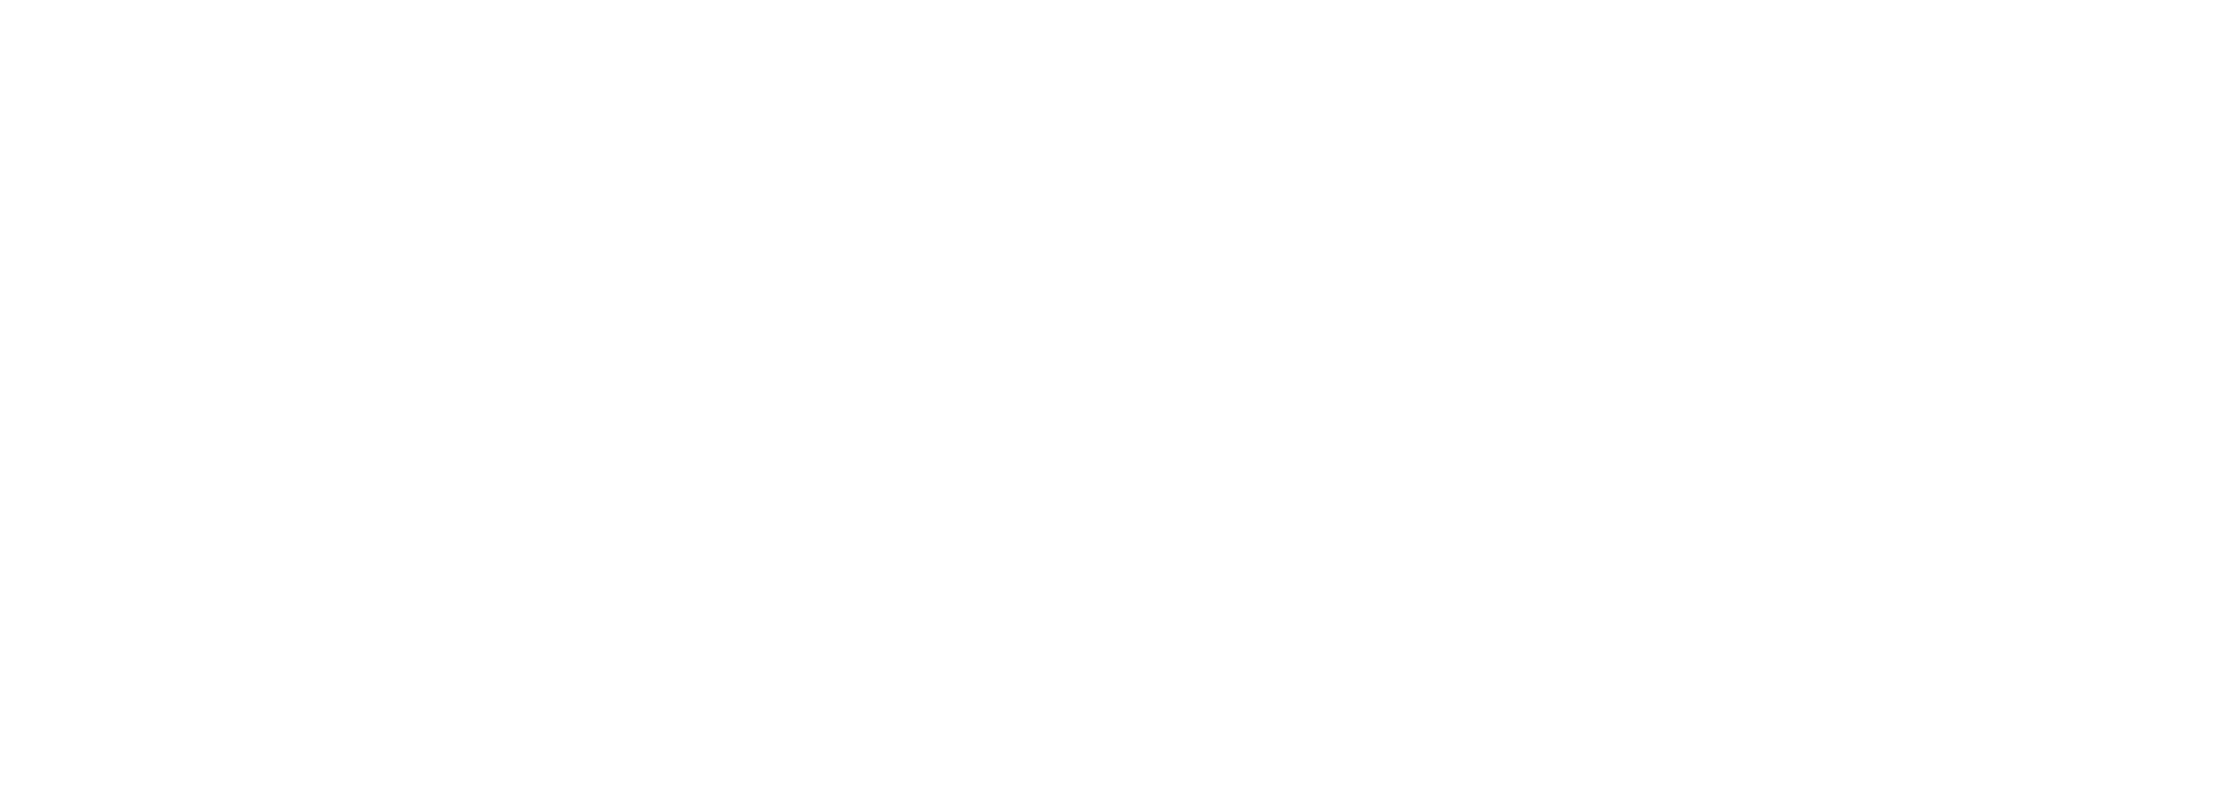 KINSMEN CLUB OF EDMONTON